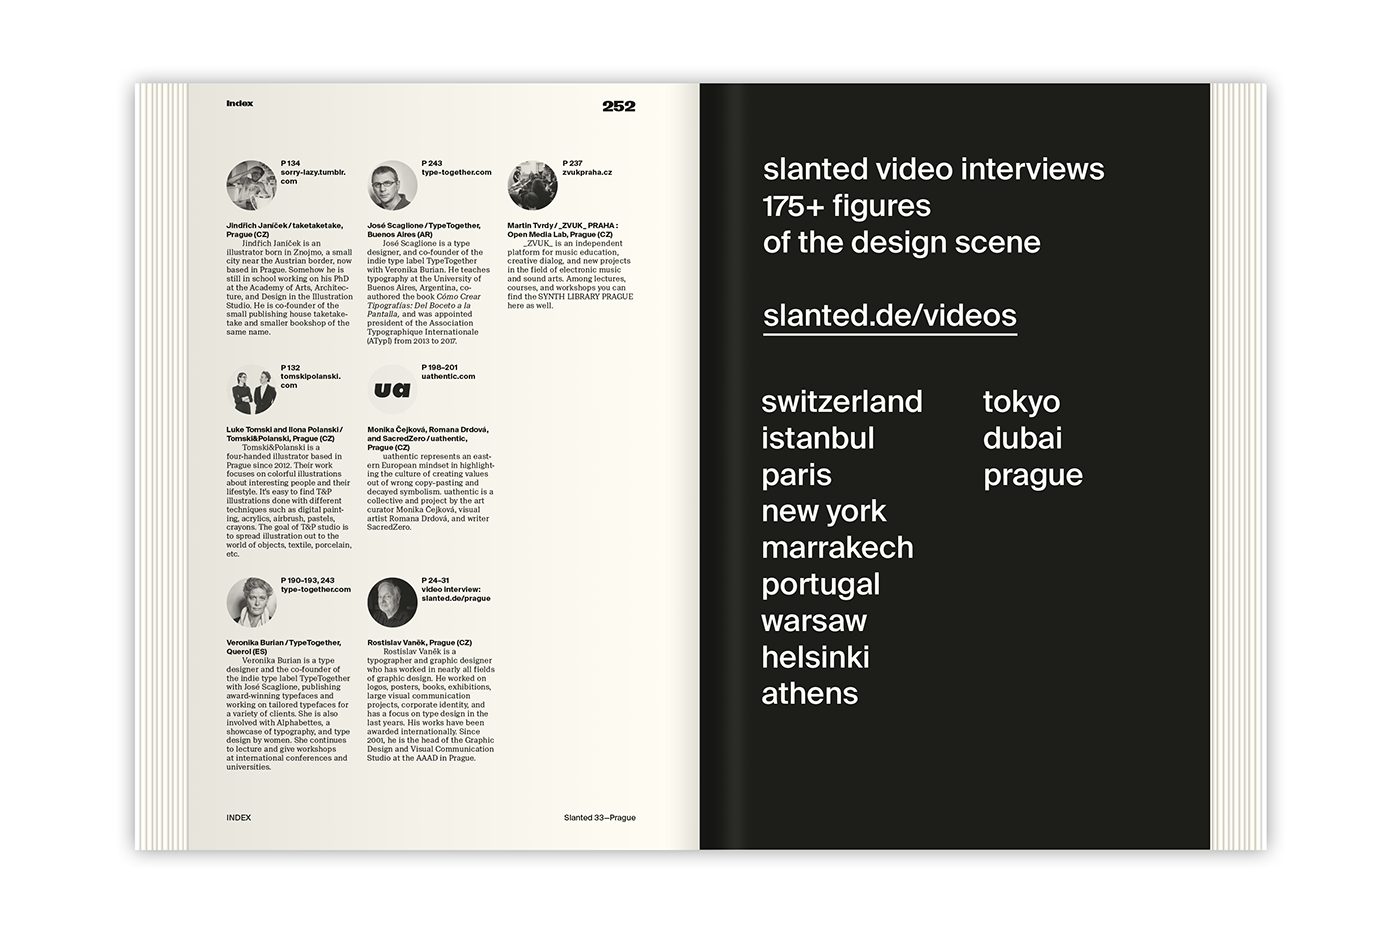 slanted slanted magazine Video interview designer artist interview design scene prague Czech Republic